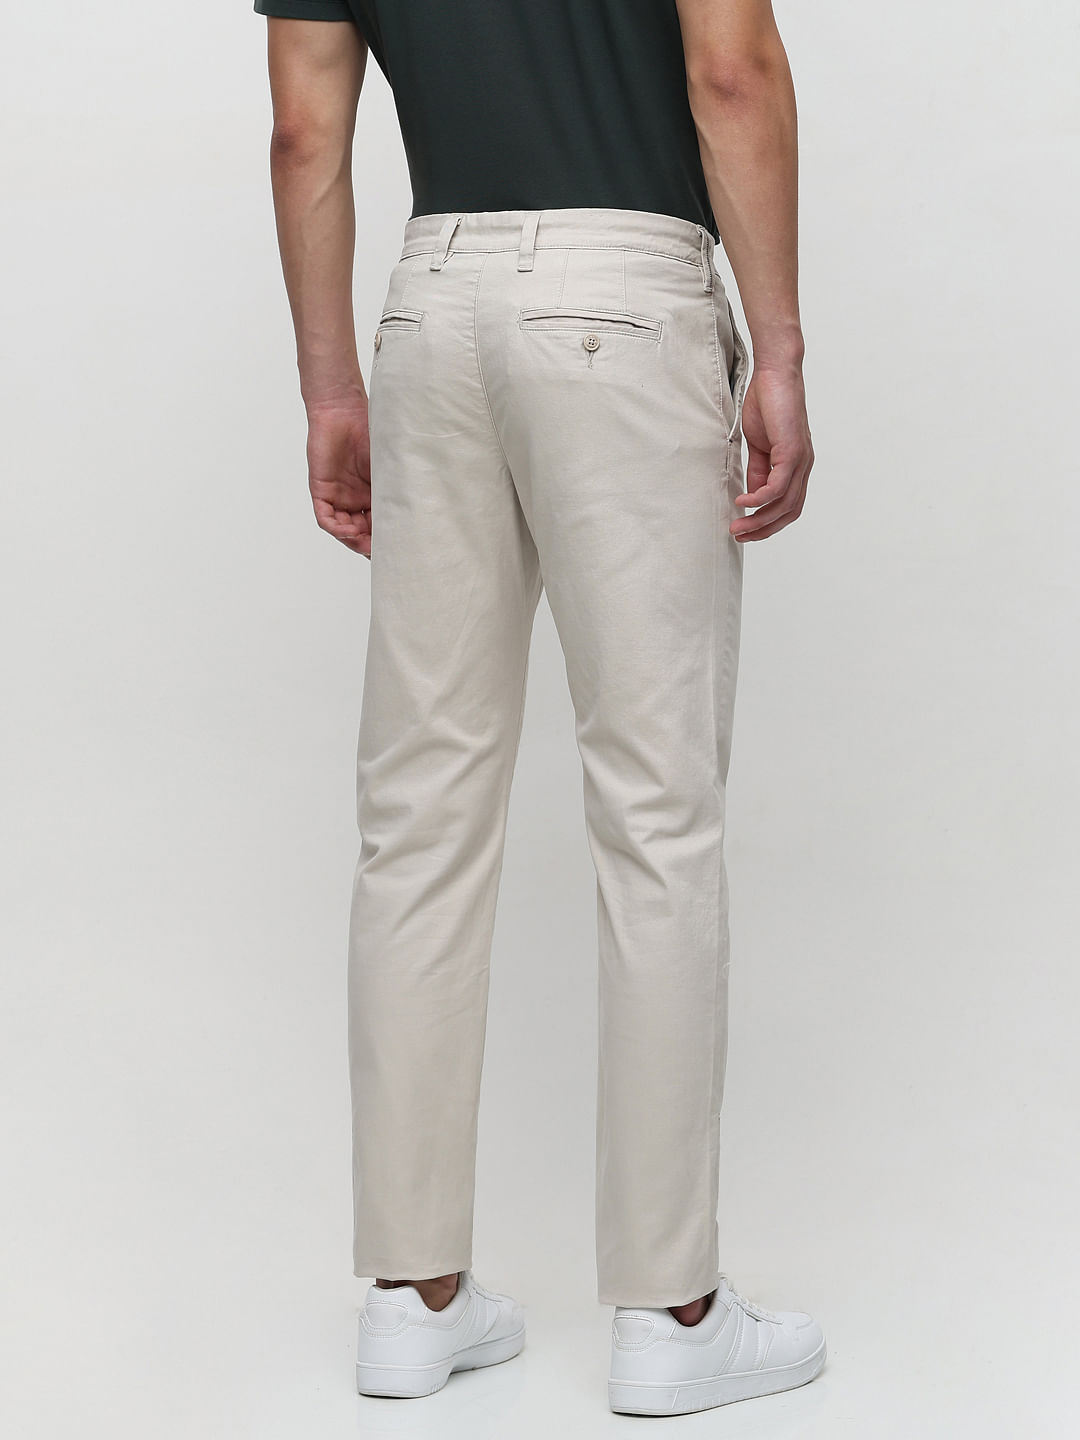 Zara off white/ beige denim jeans trousers, Men's Fashion, Bottoms, Jeans  on Carousell